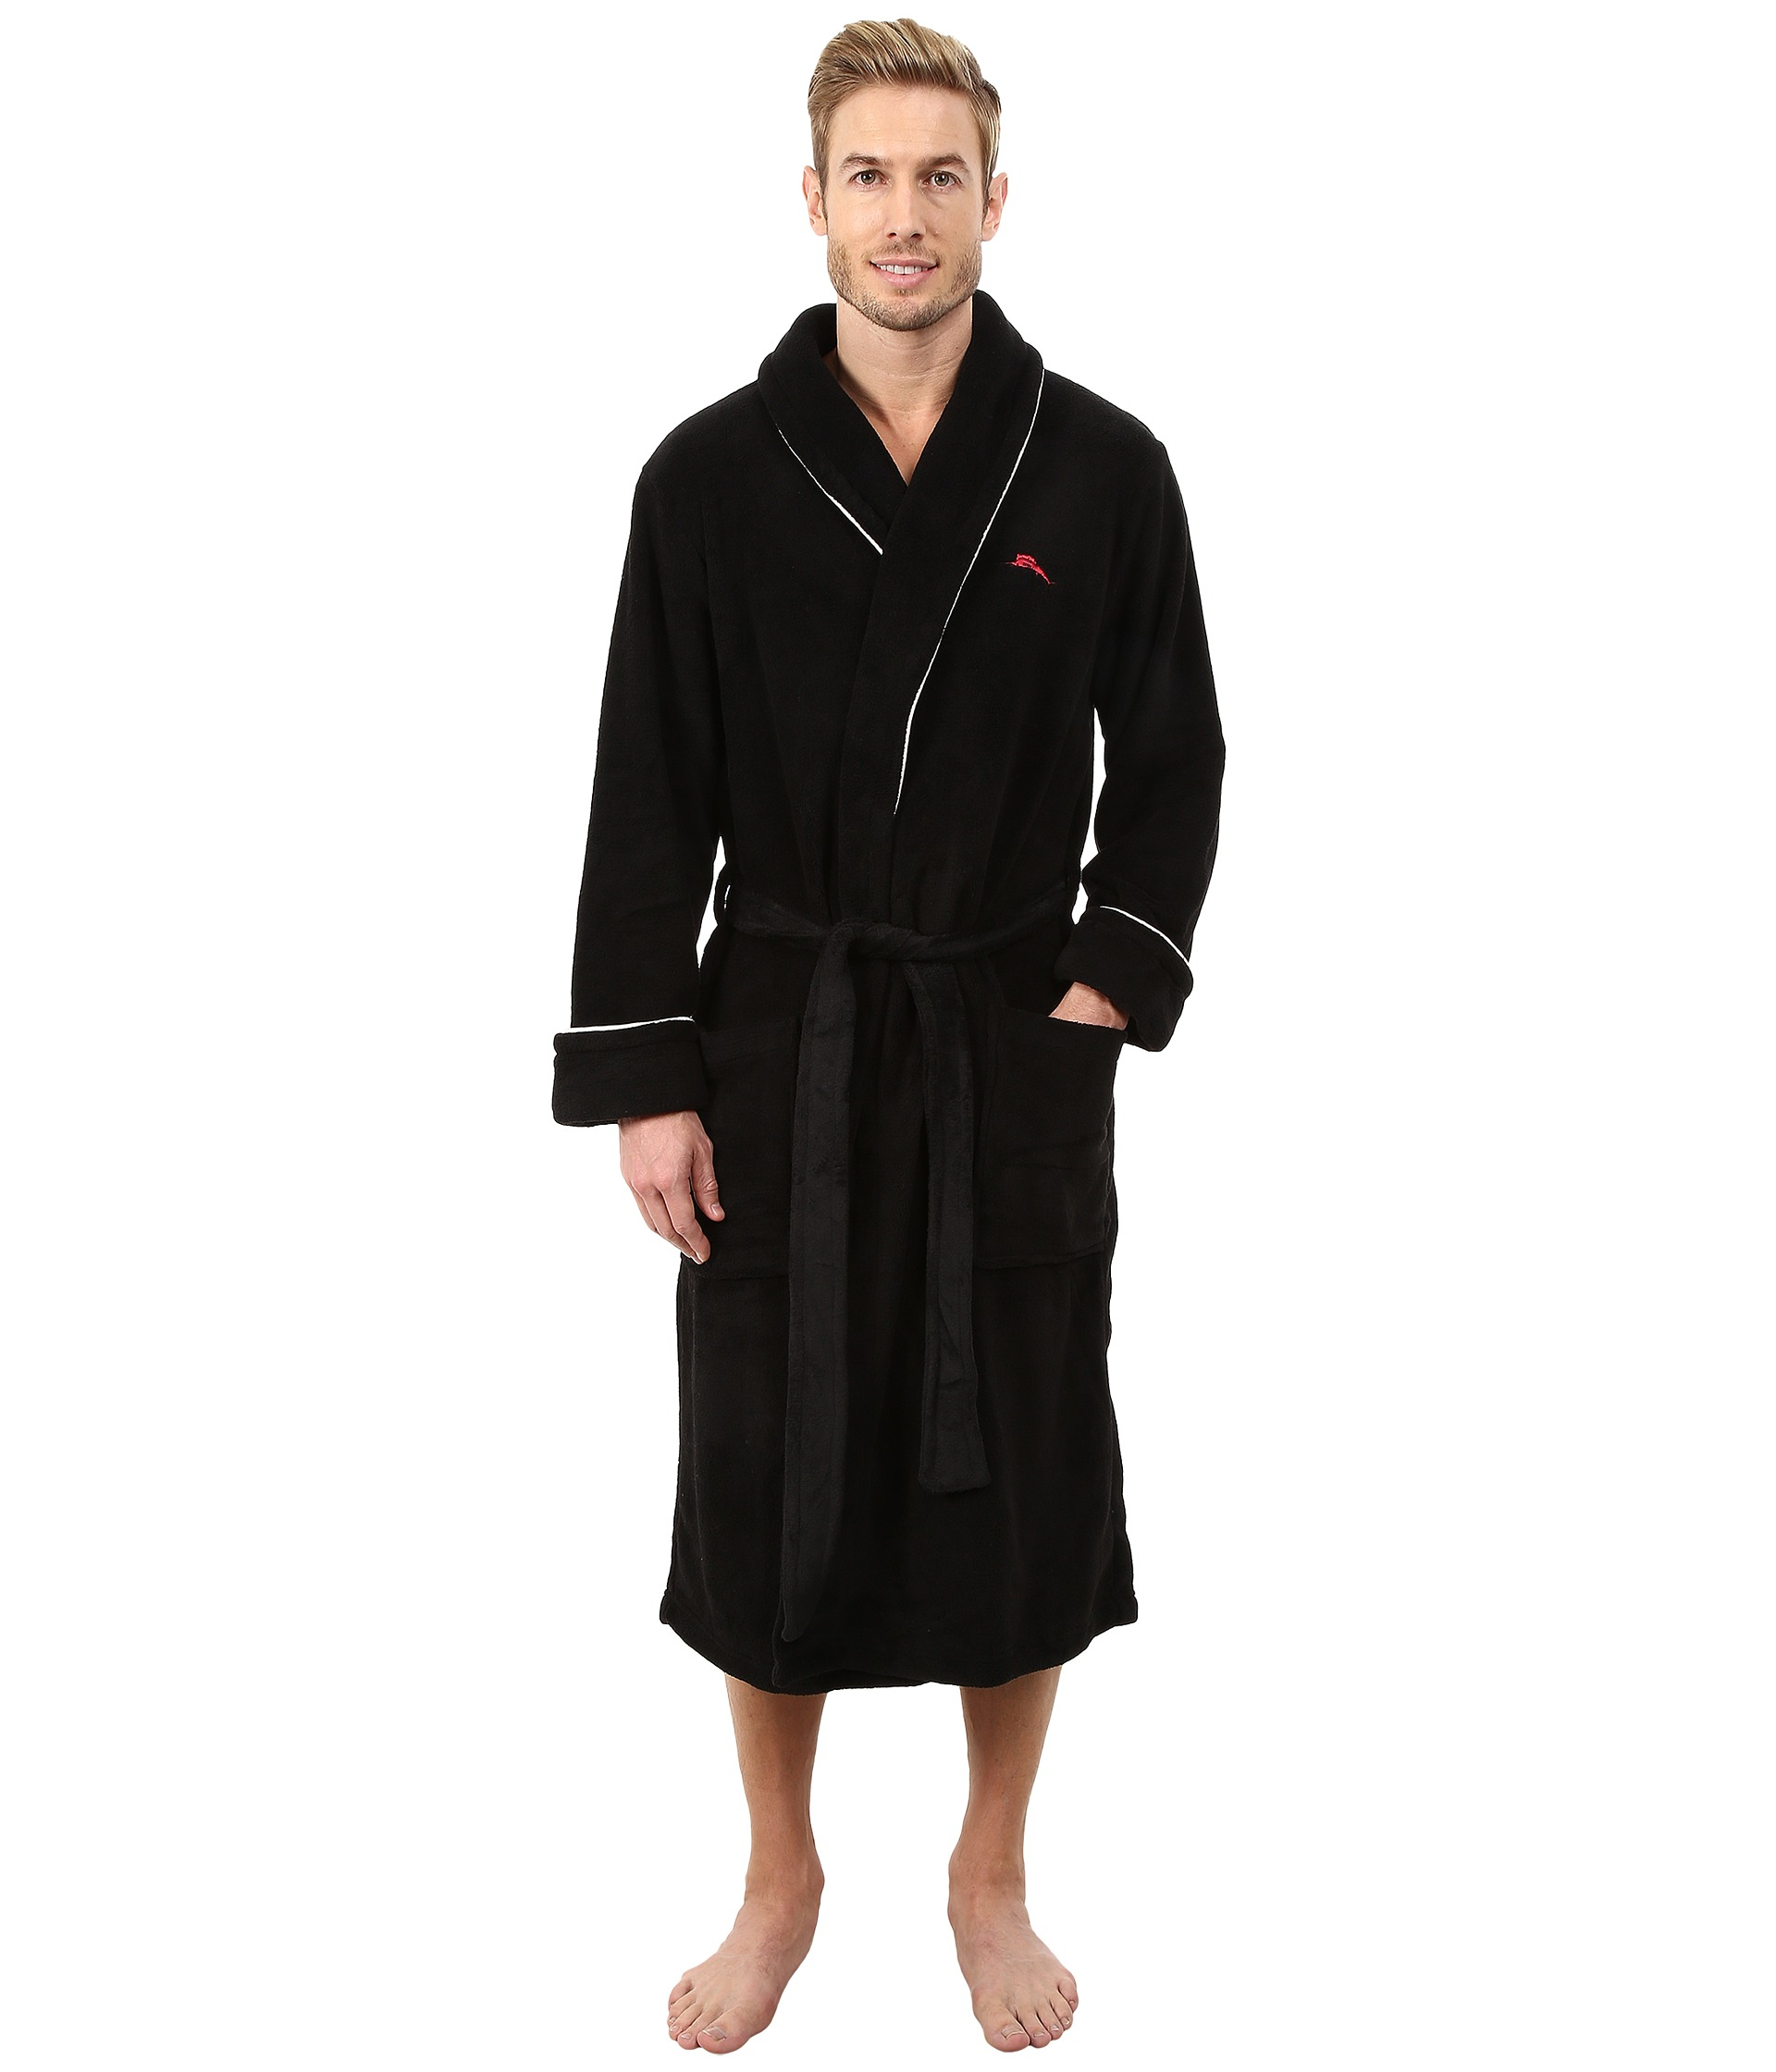 Lyst - Tommy Bahama Plush Robe in Black for Men